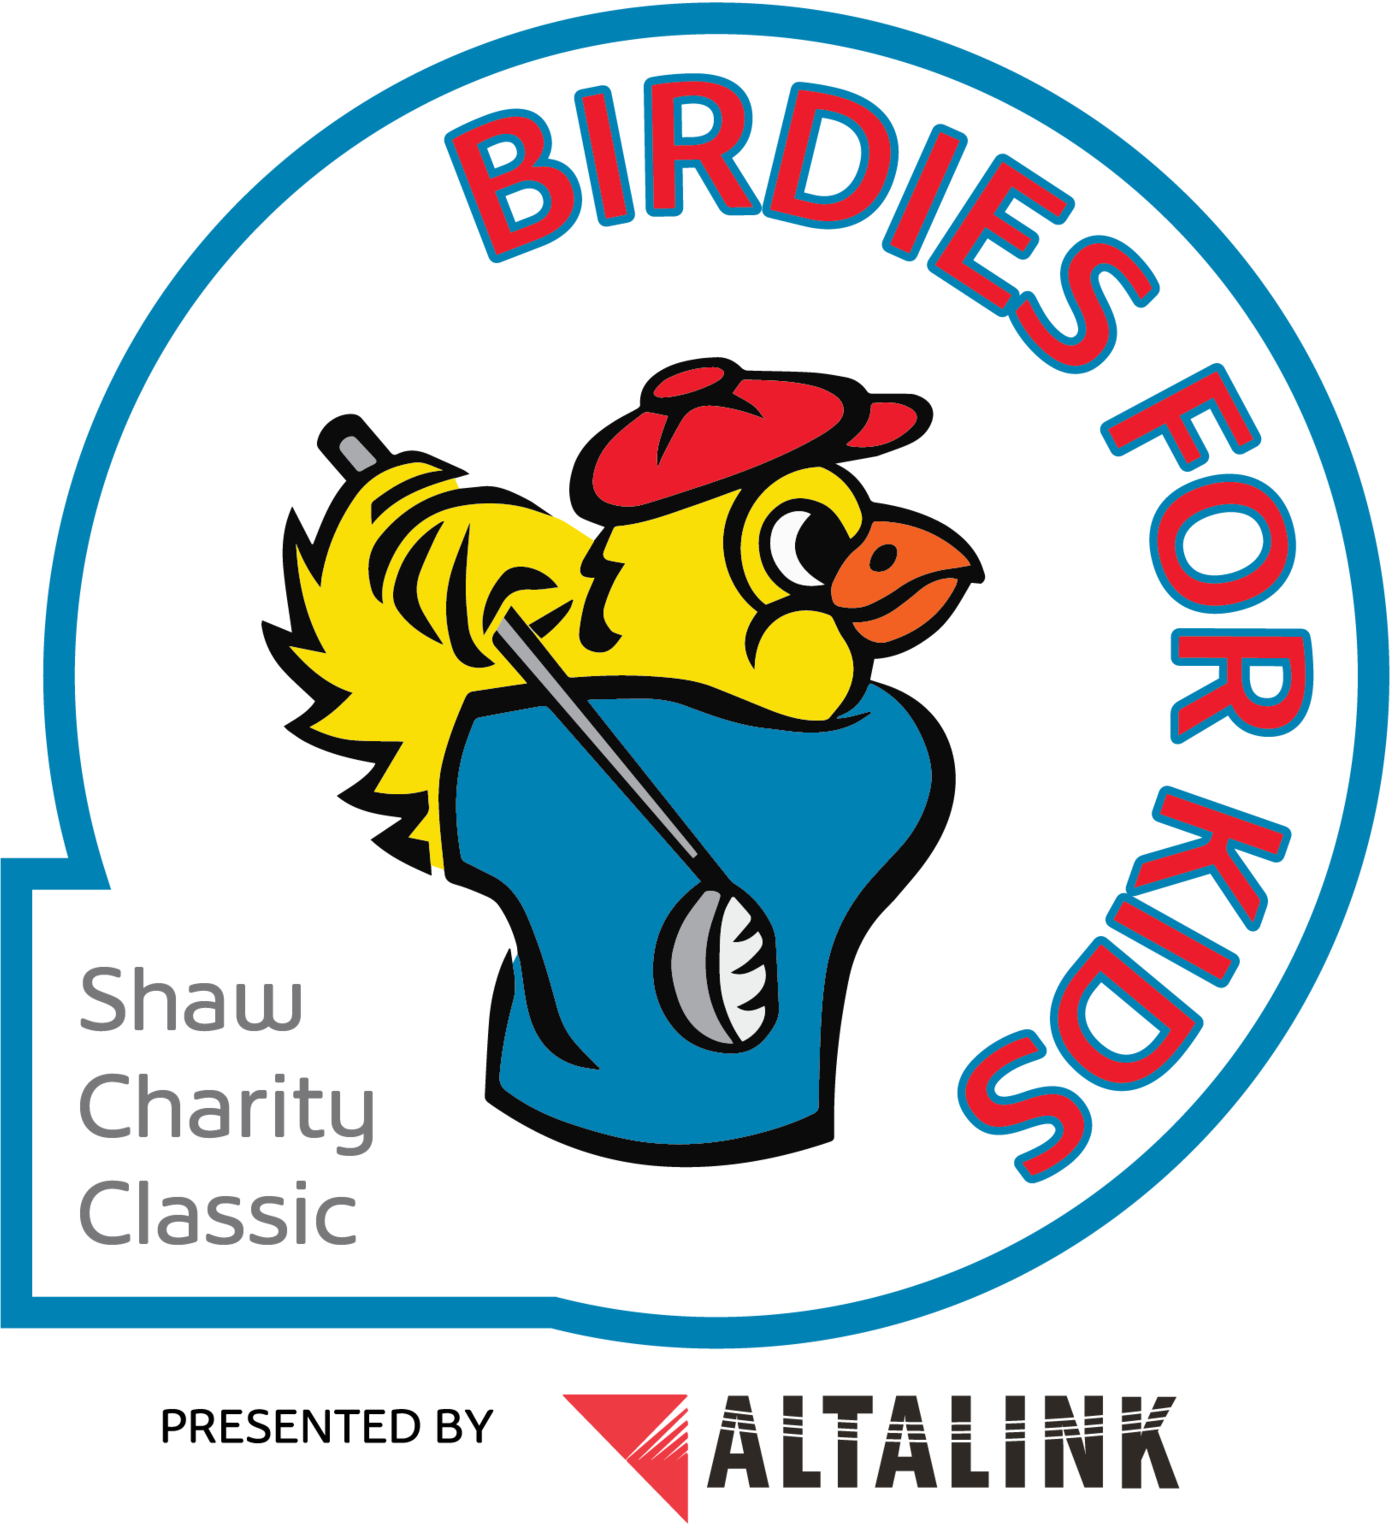 Birdies for Kids Logo